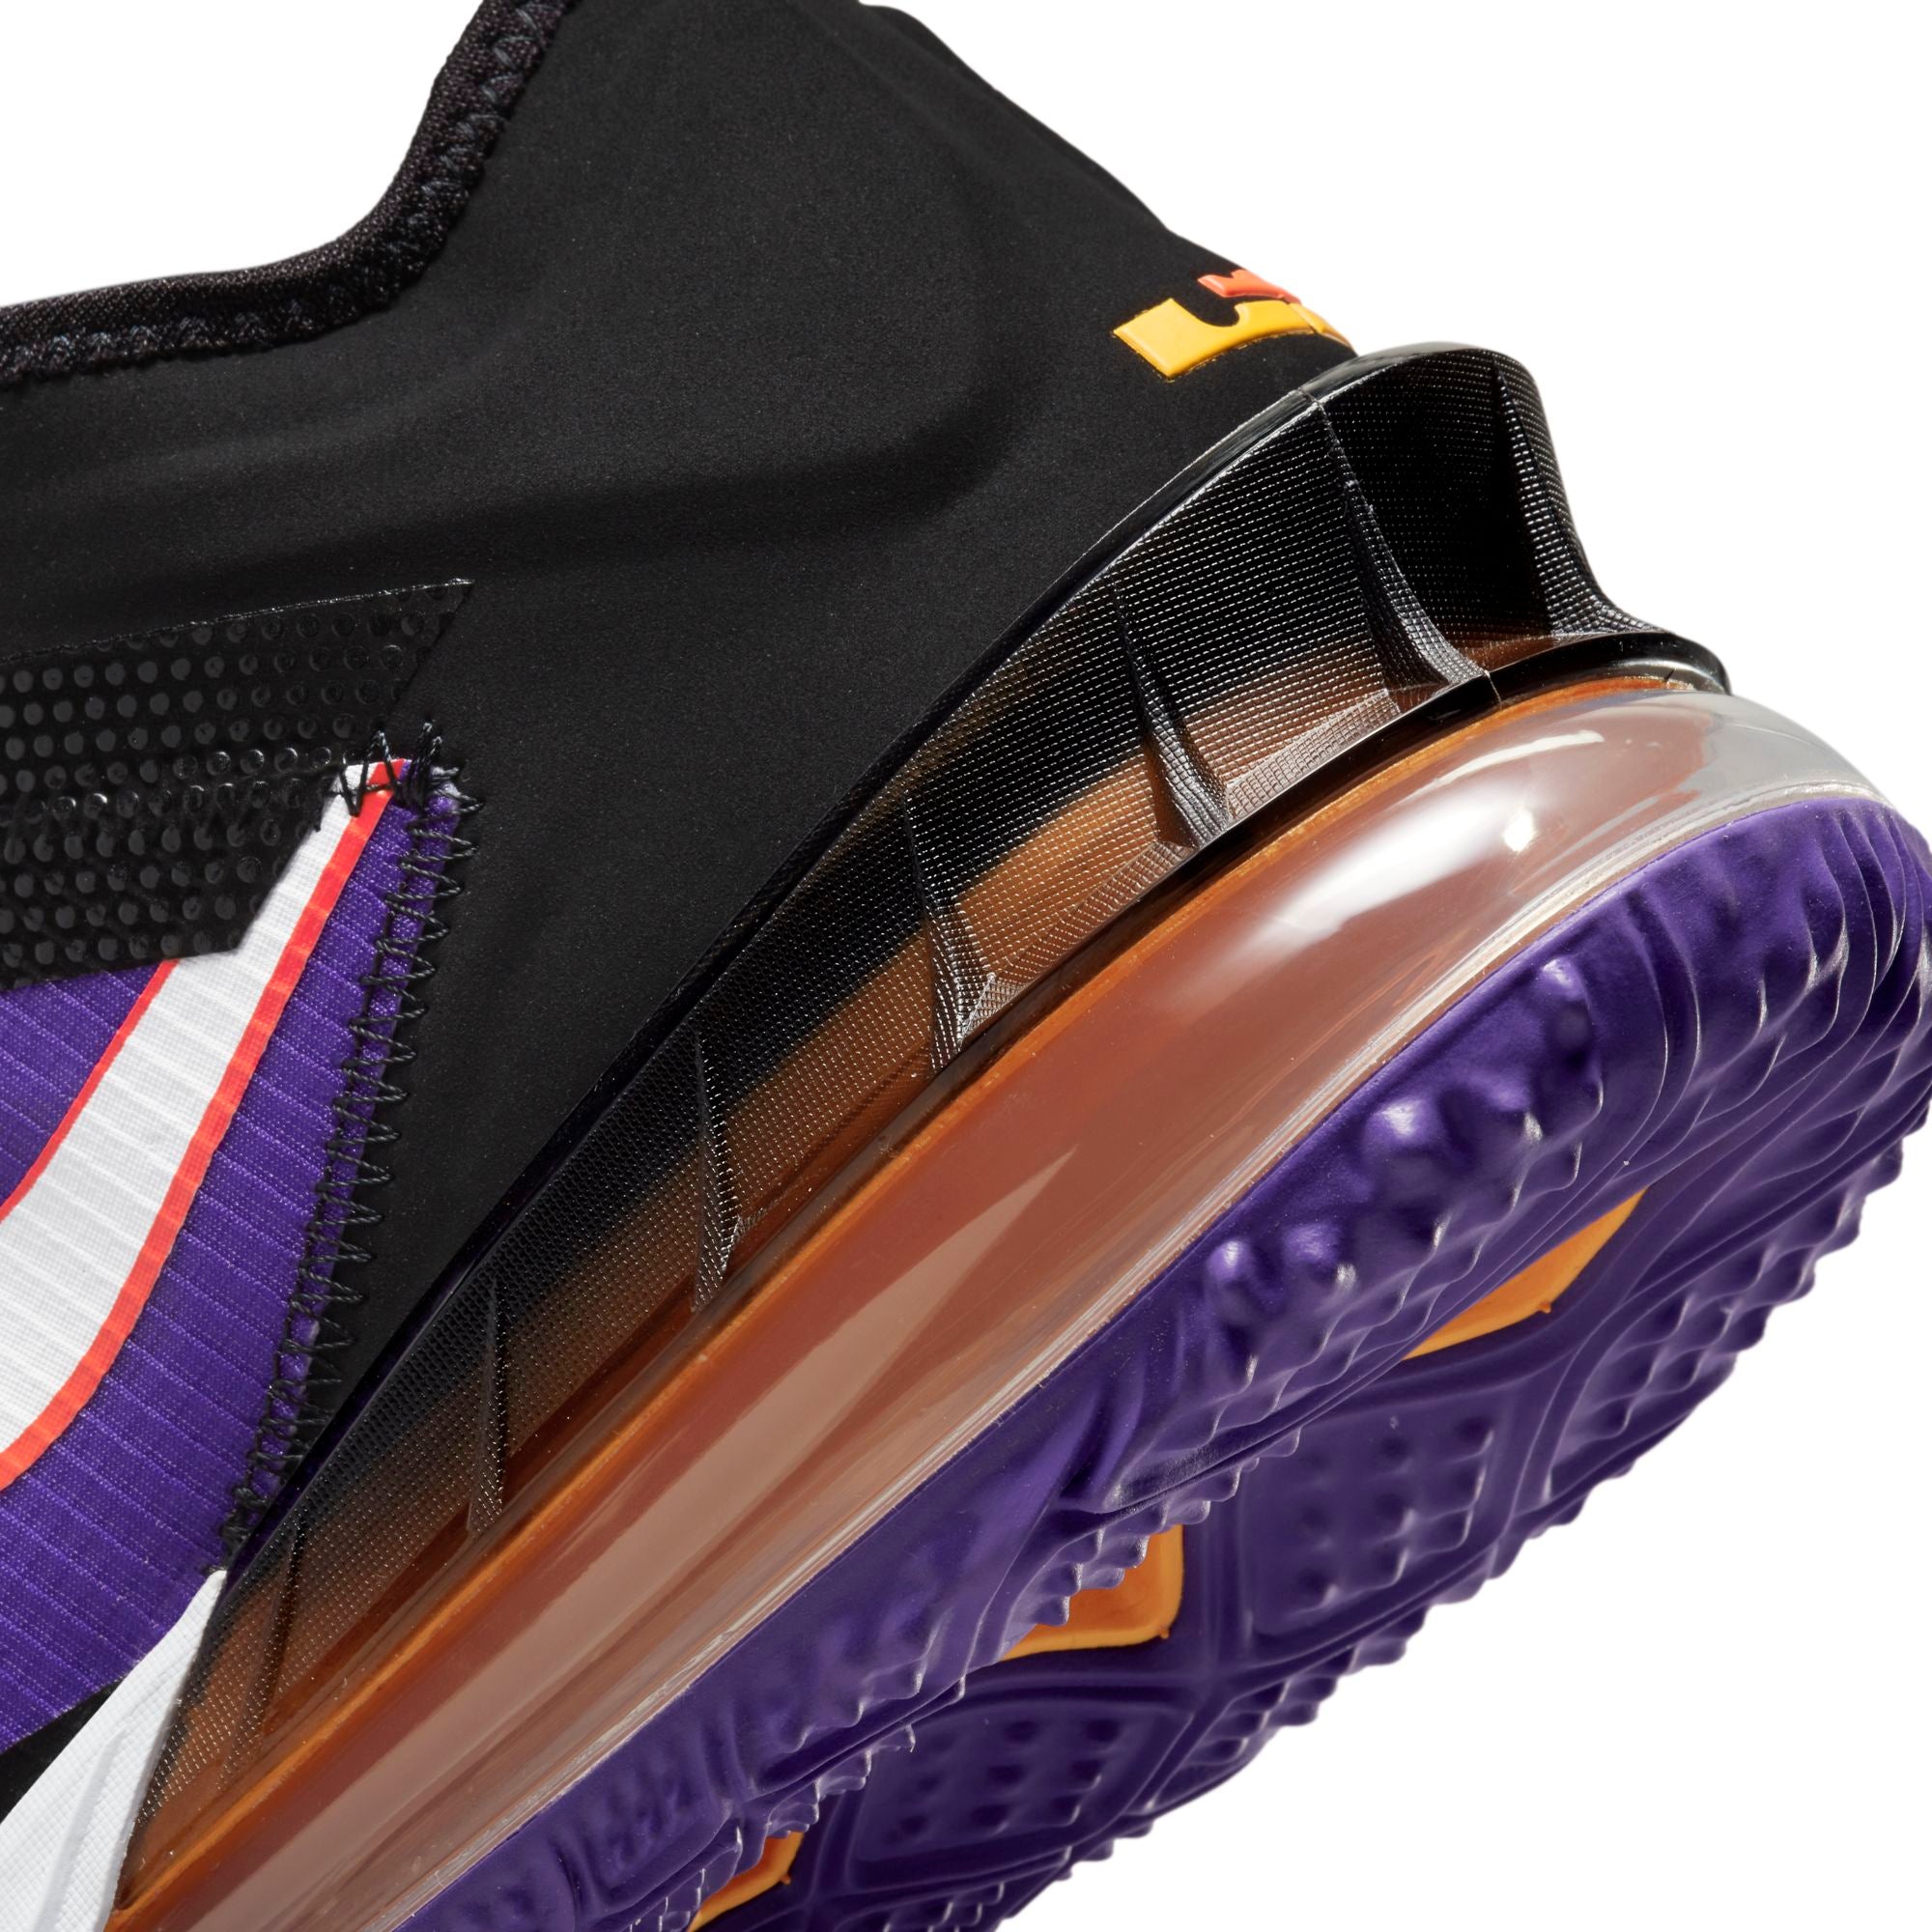 Nike Lebron 18 Low Basketball Shoe - Black/White/Fierce Purple/Racer Blue